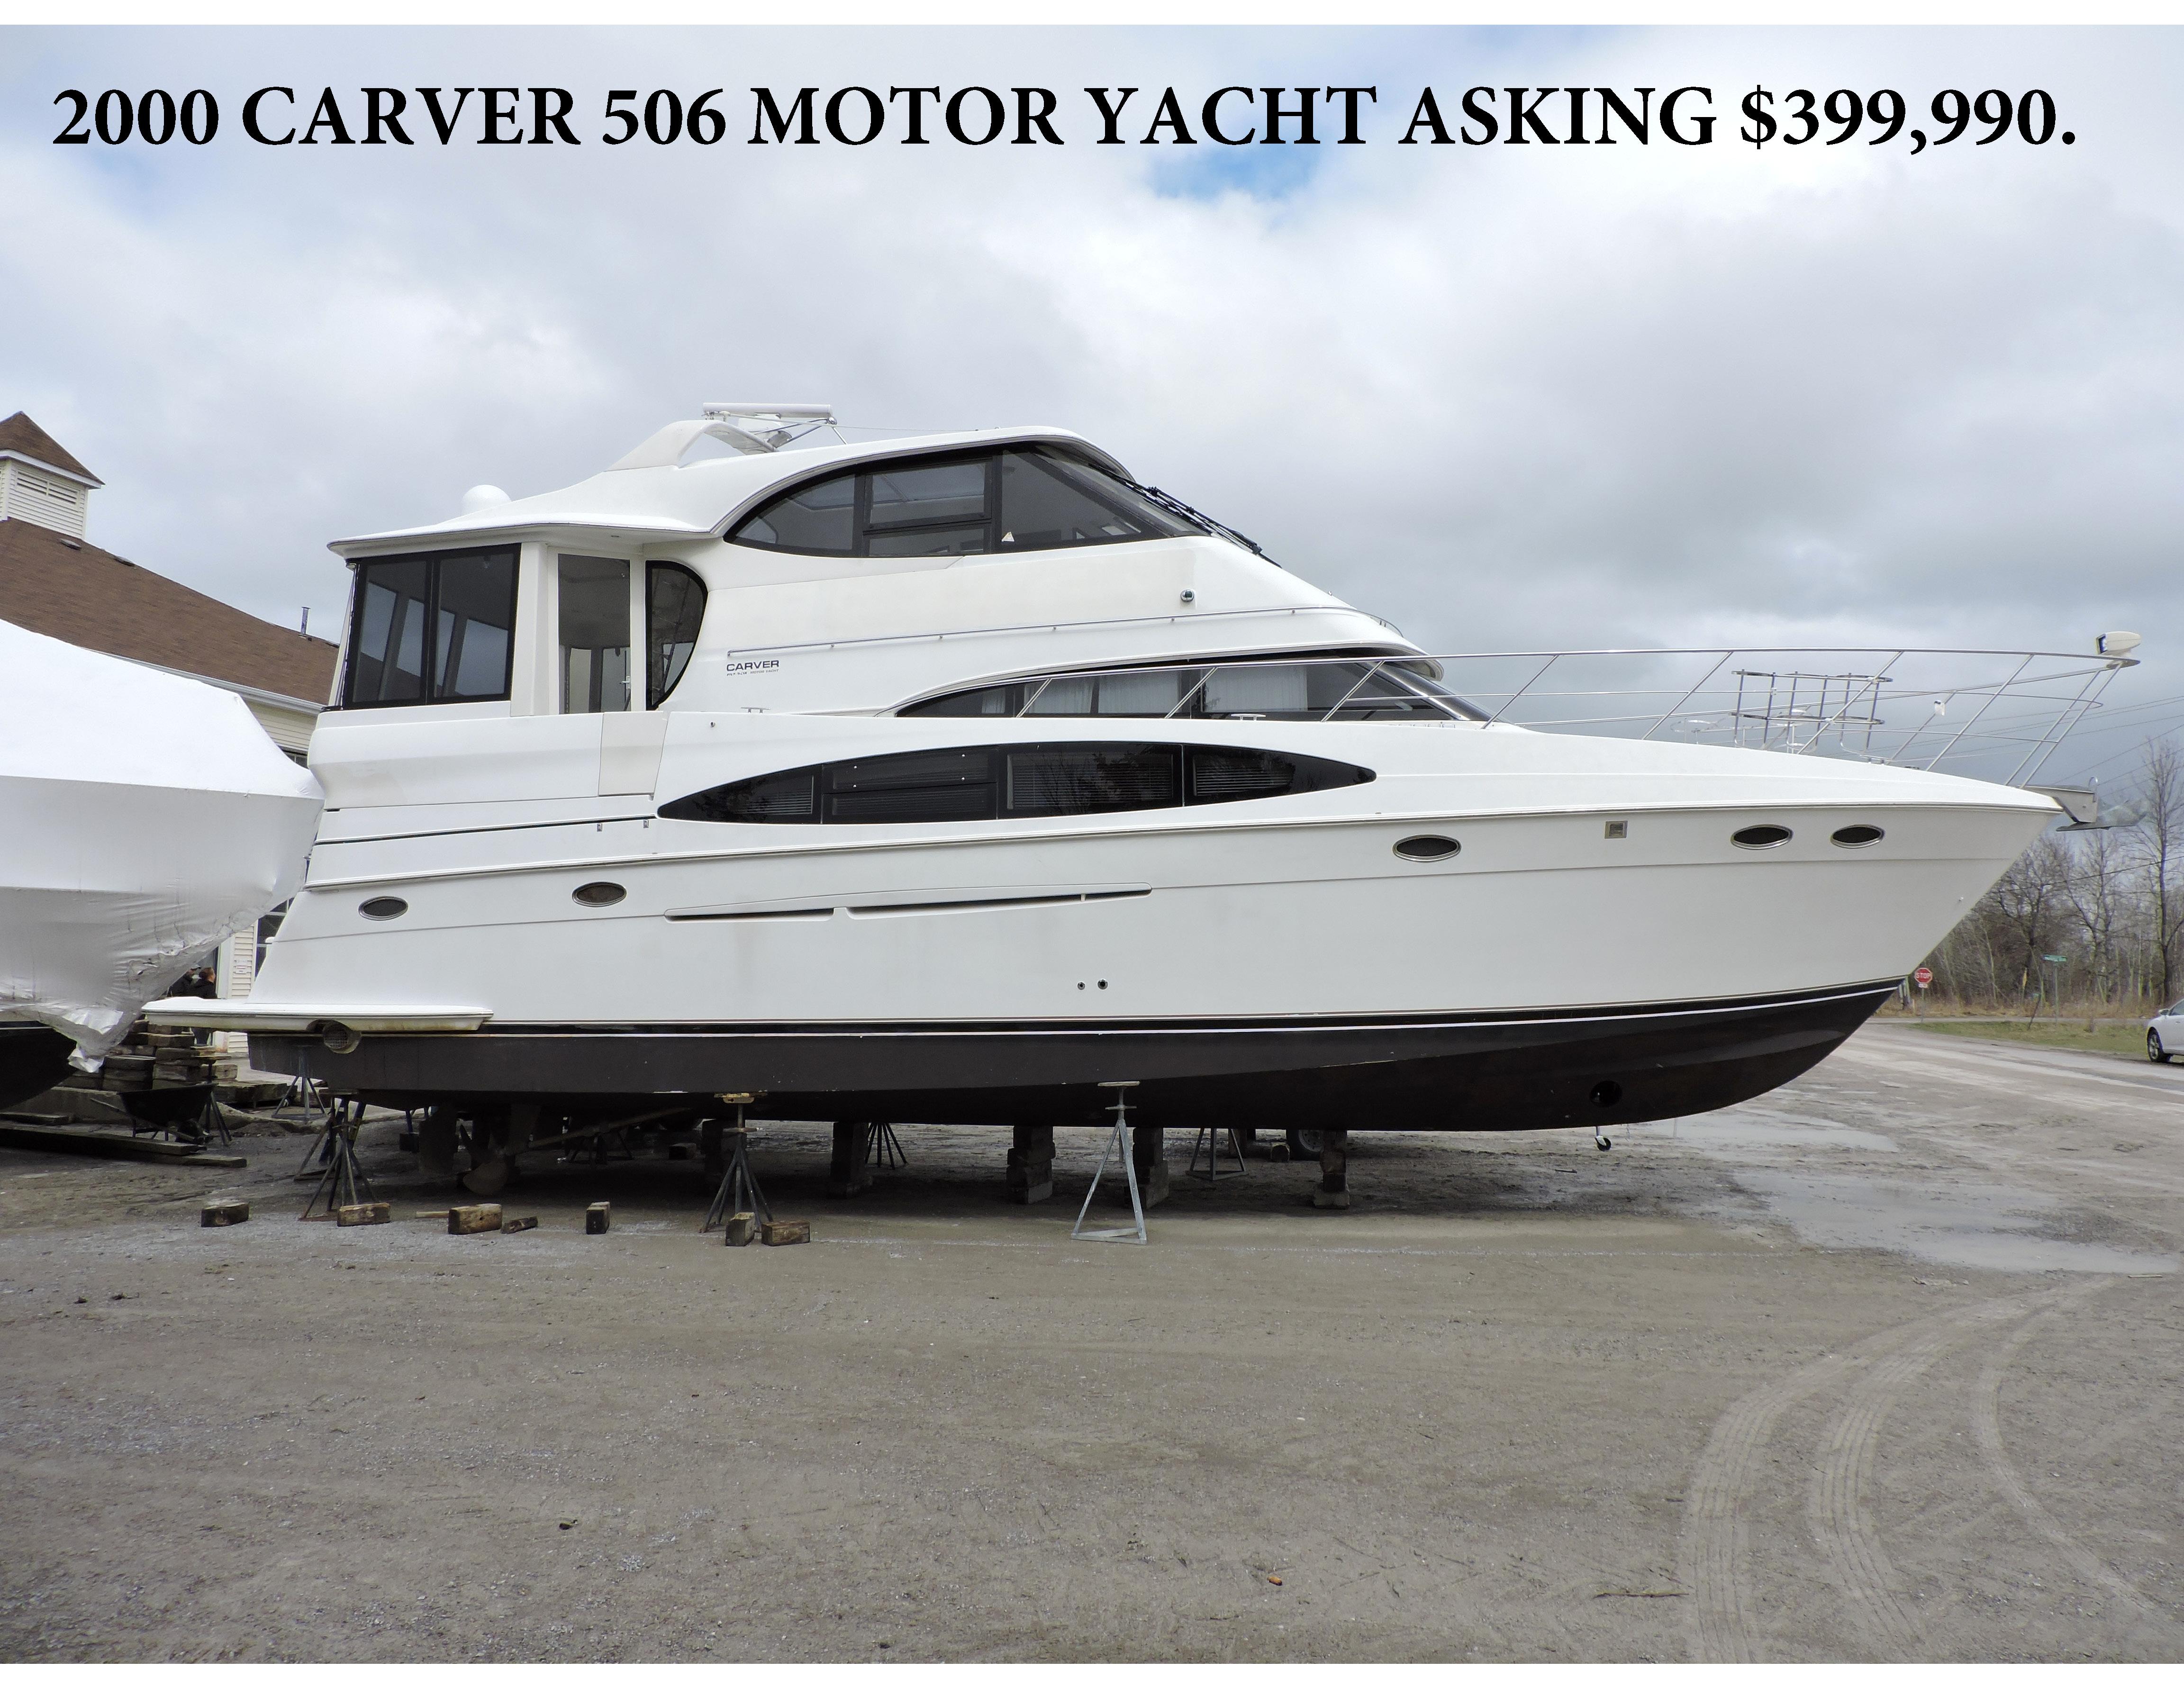 carver 506 motor yachts for sale